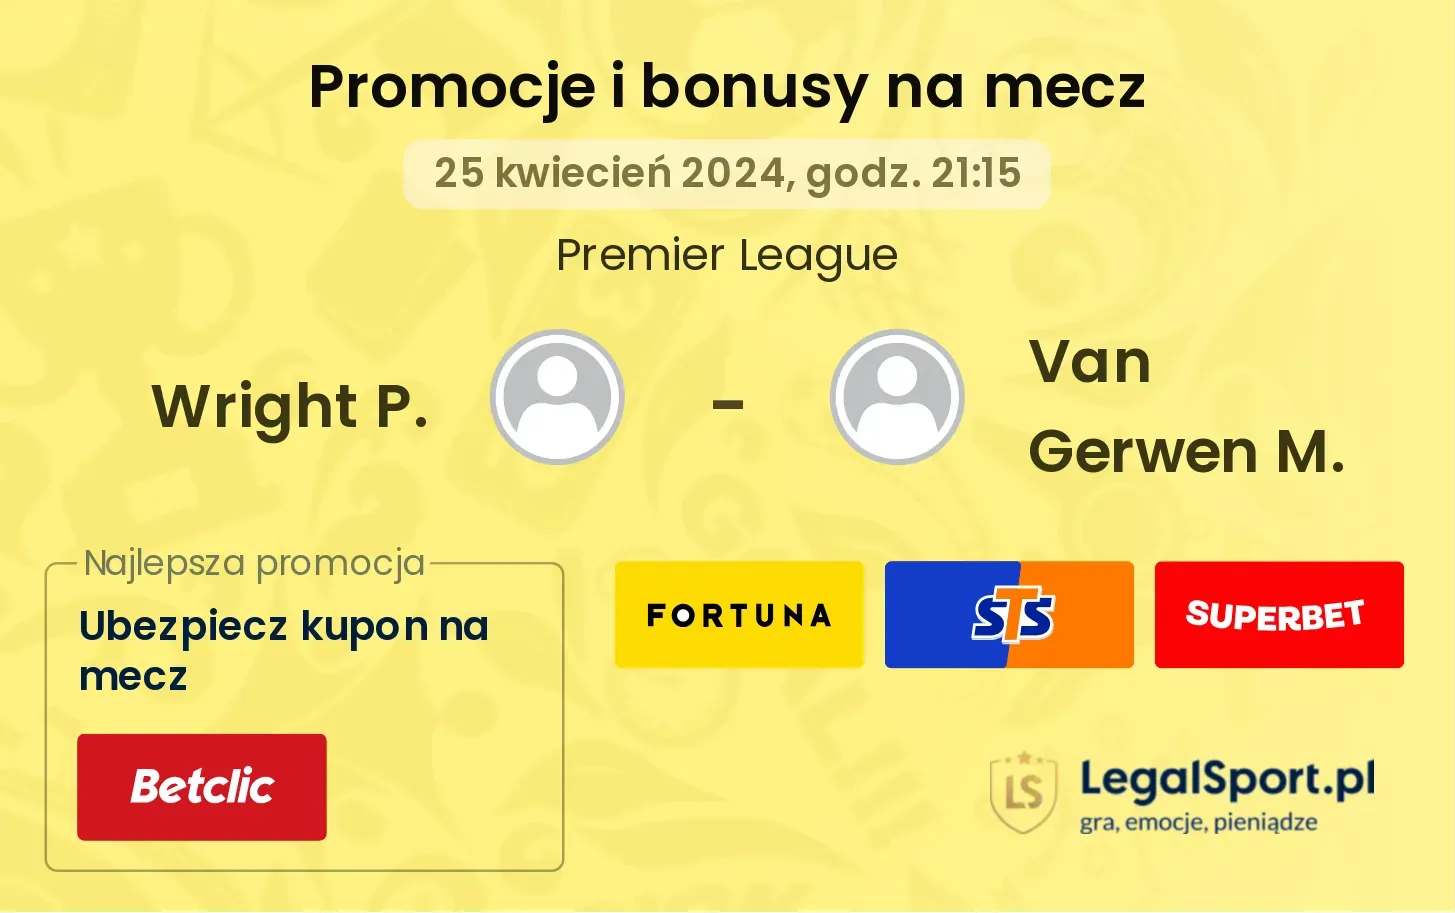 Wright P. - Van Gerwen M. promocje bonusy na mecz